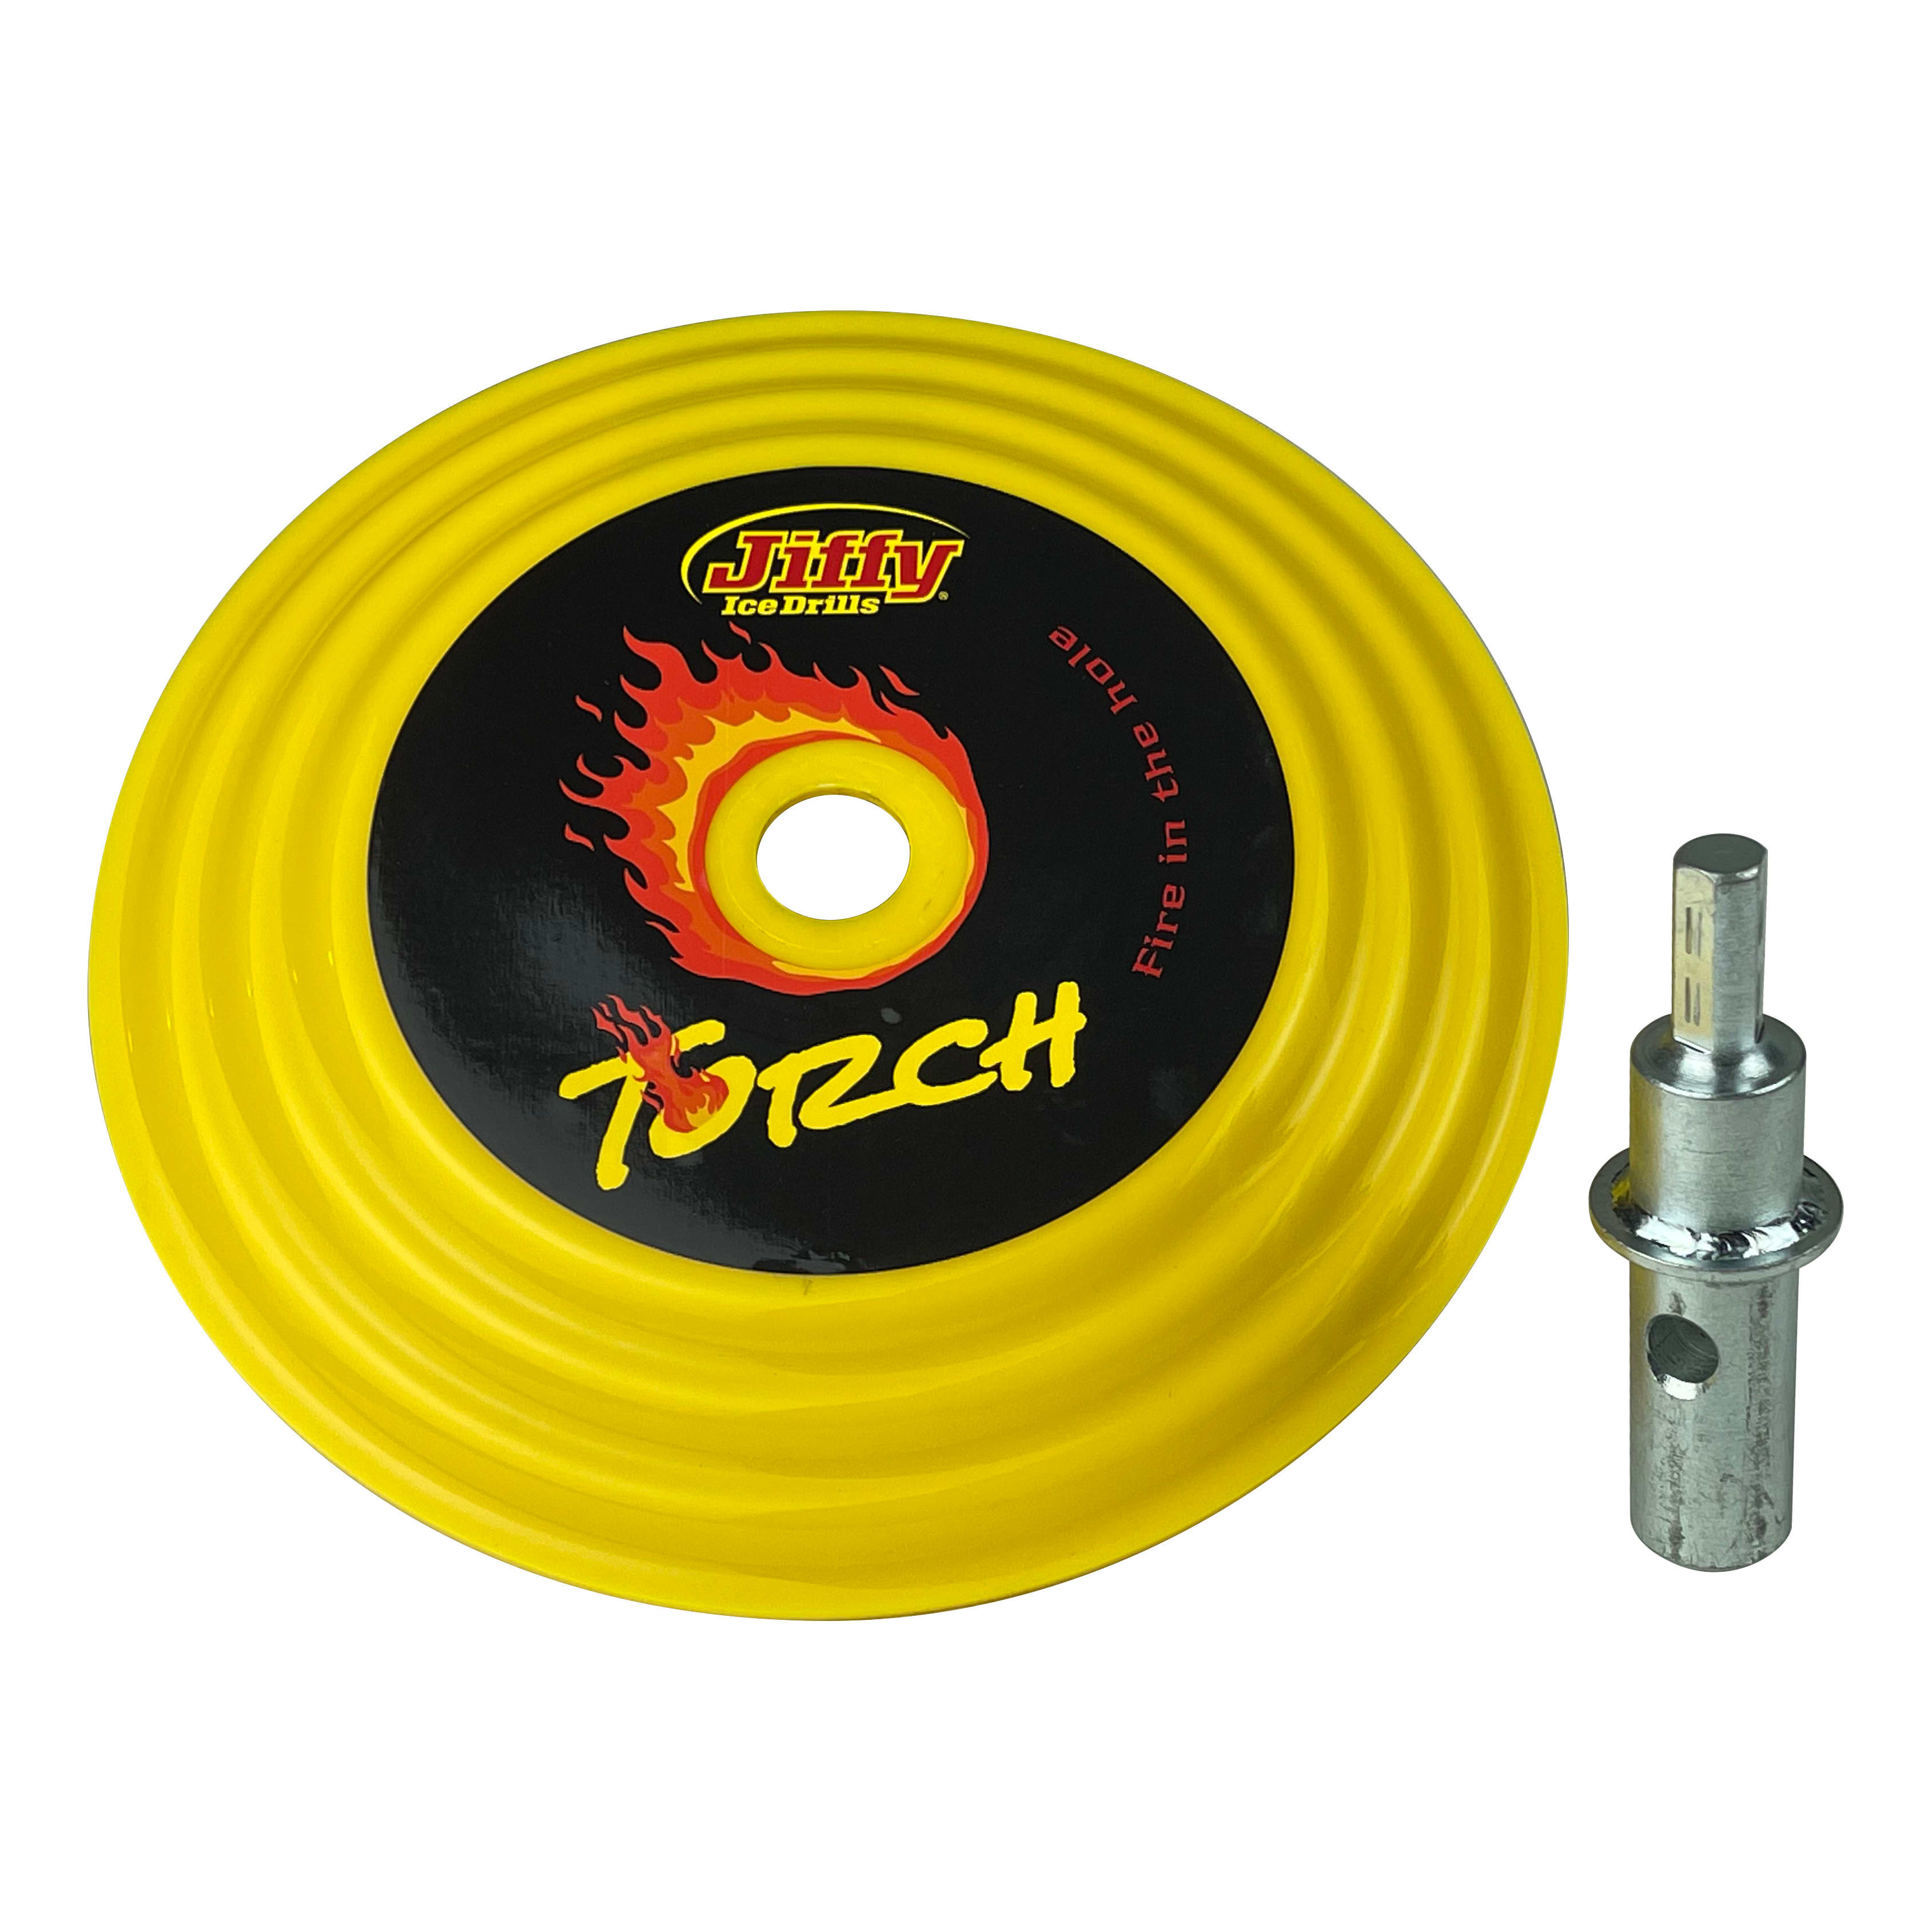 Jiffy Torch Cordless Drill Conversion Kit